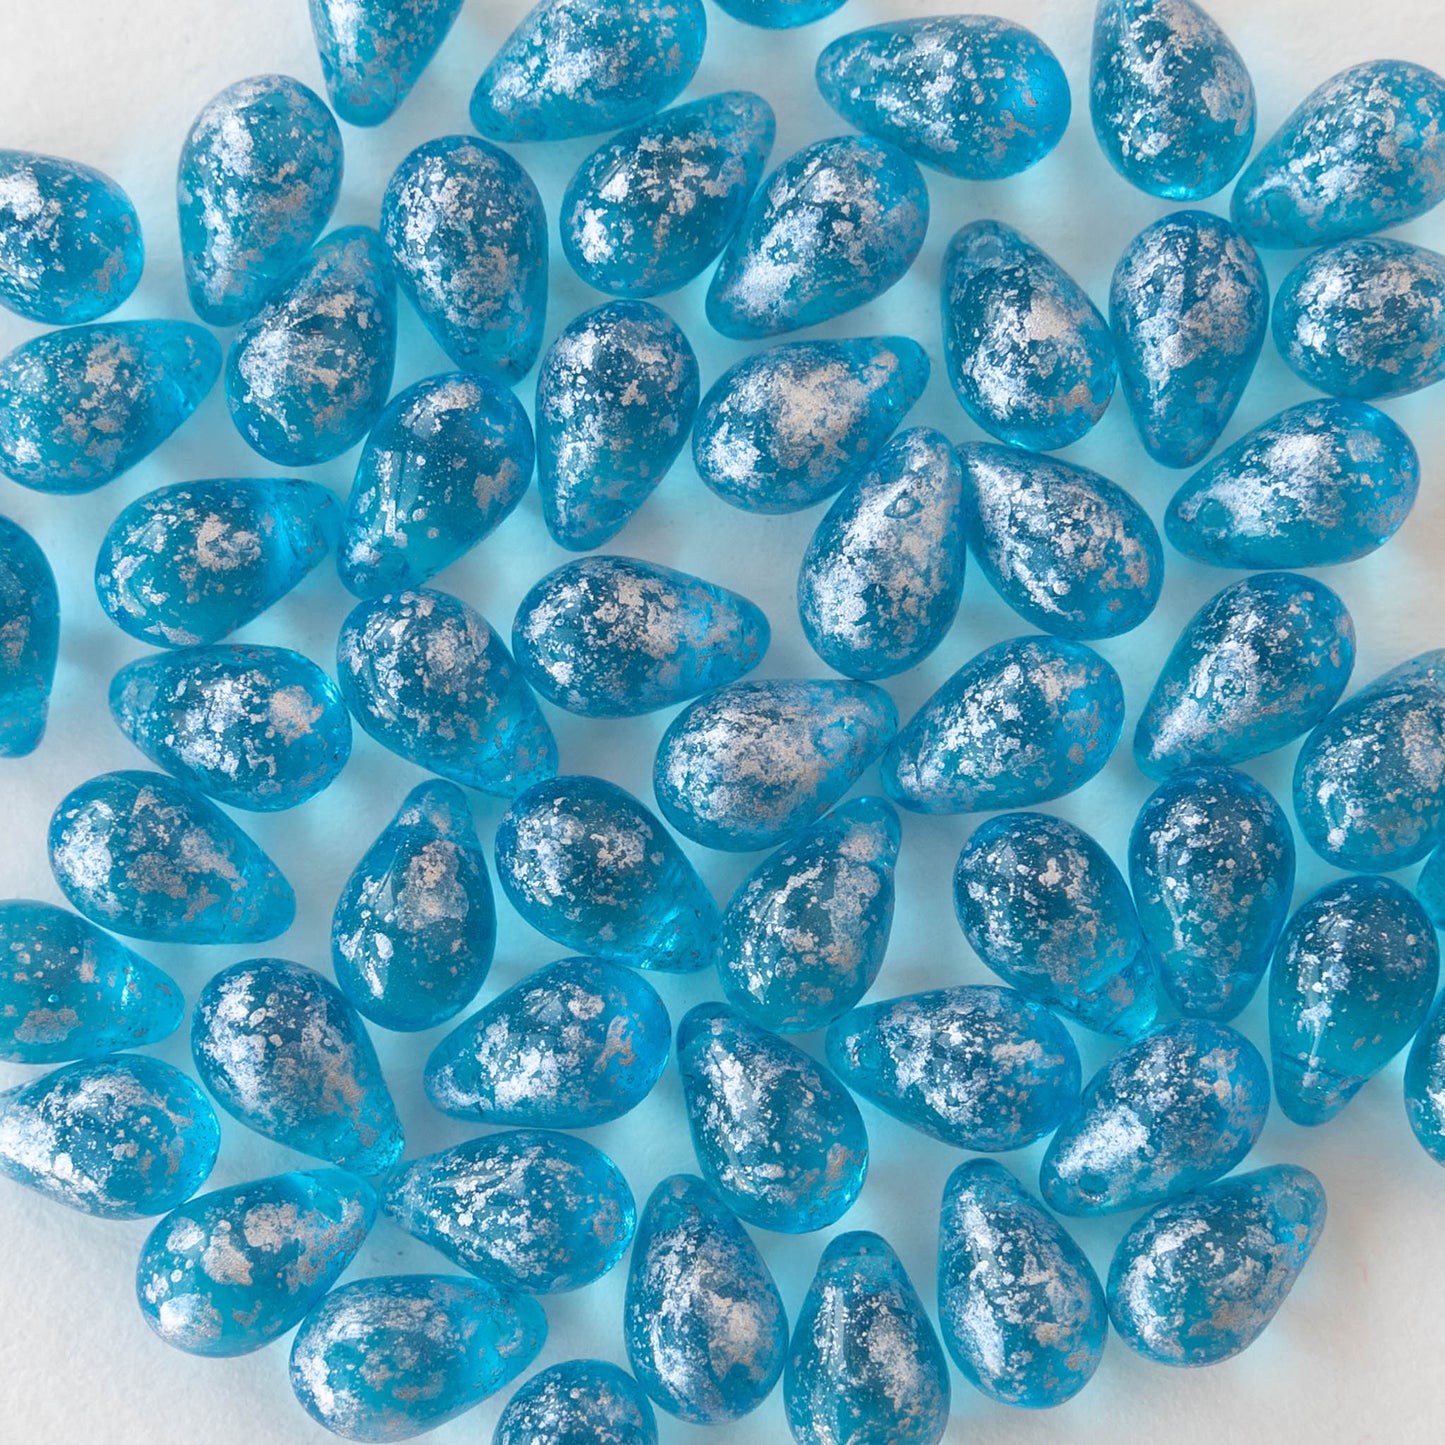 6x9mm Glass Teardrop Beads - Aqua Blue with Silver Dust - 50 Beads